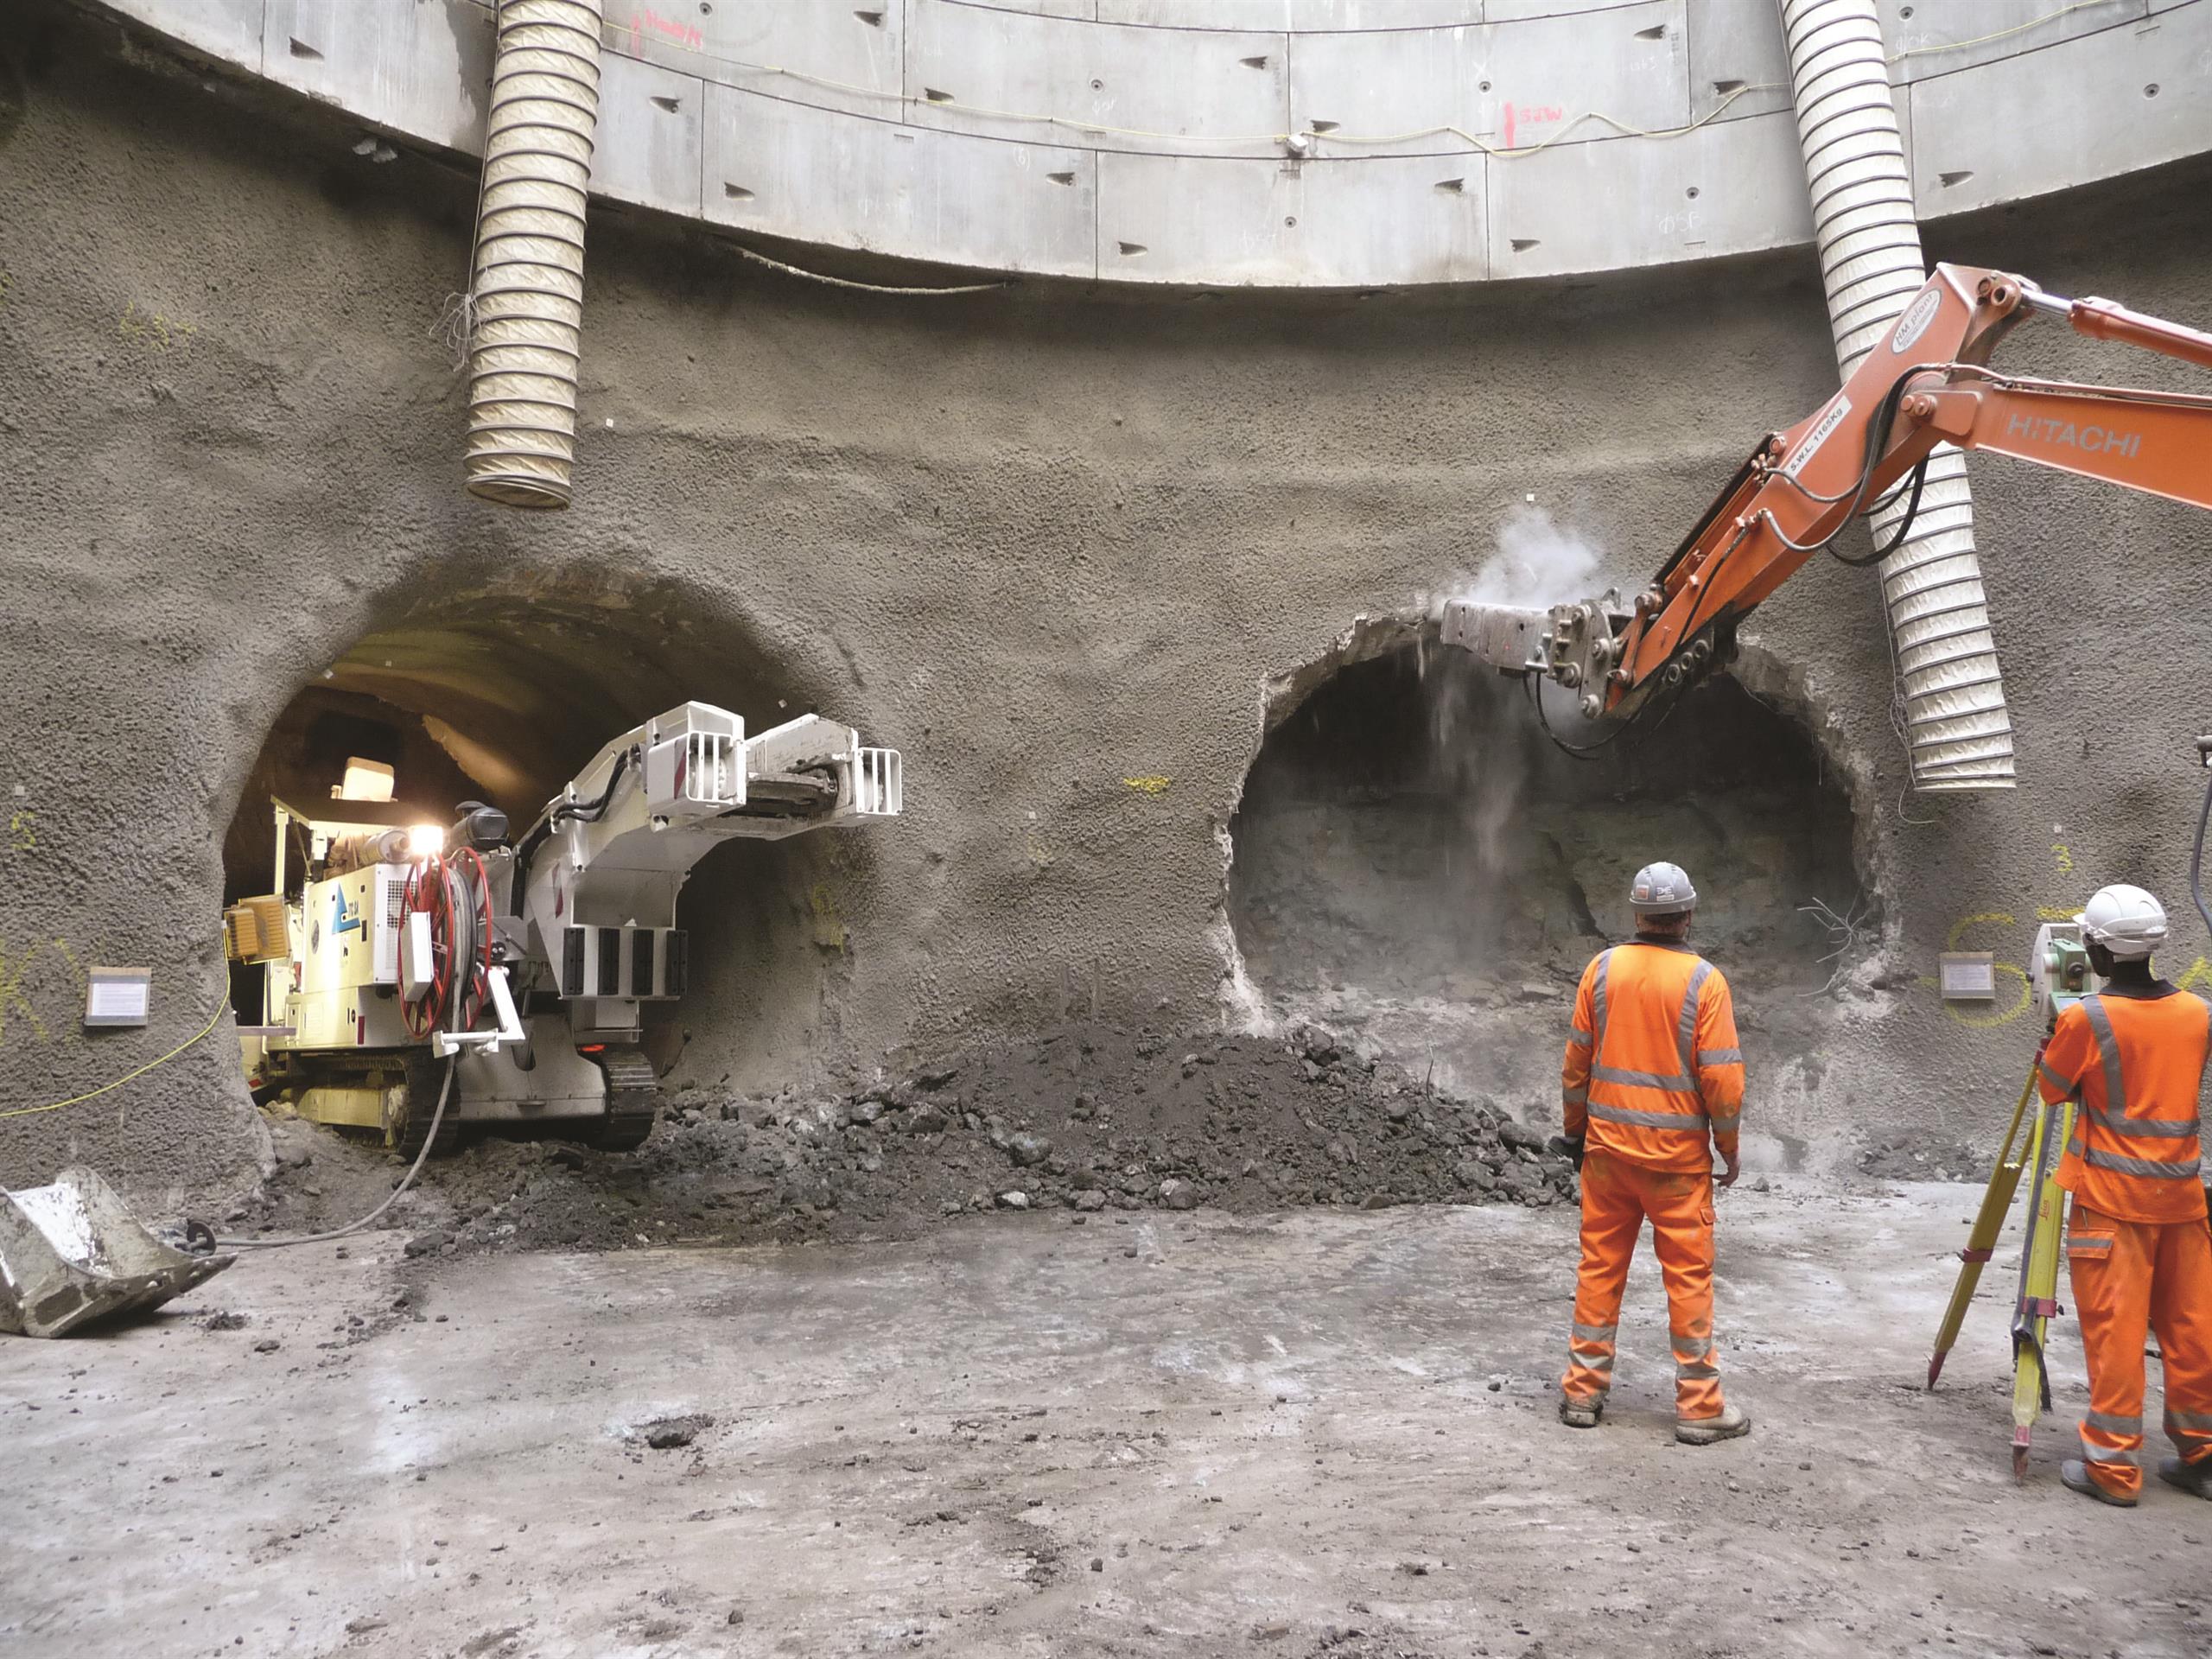 Tunnel under construction